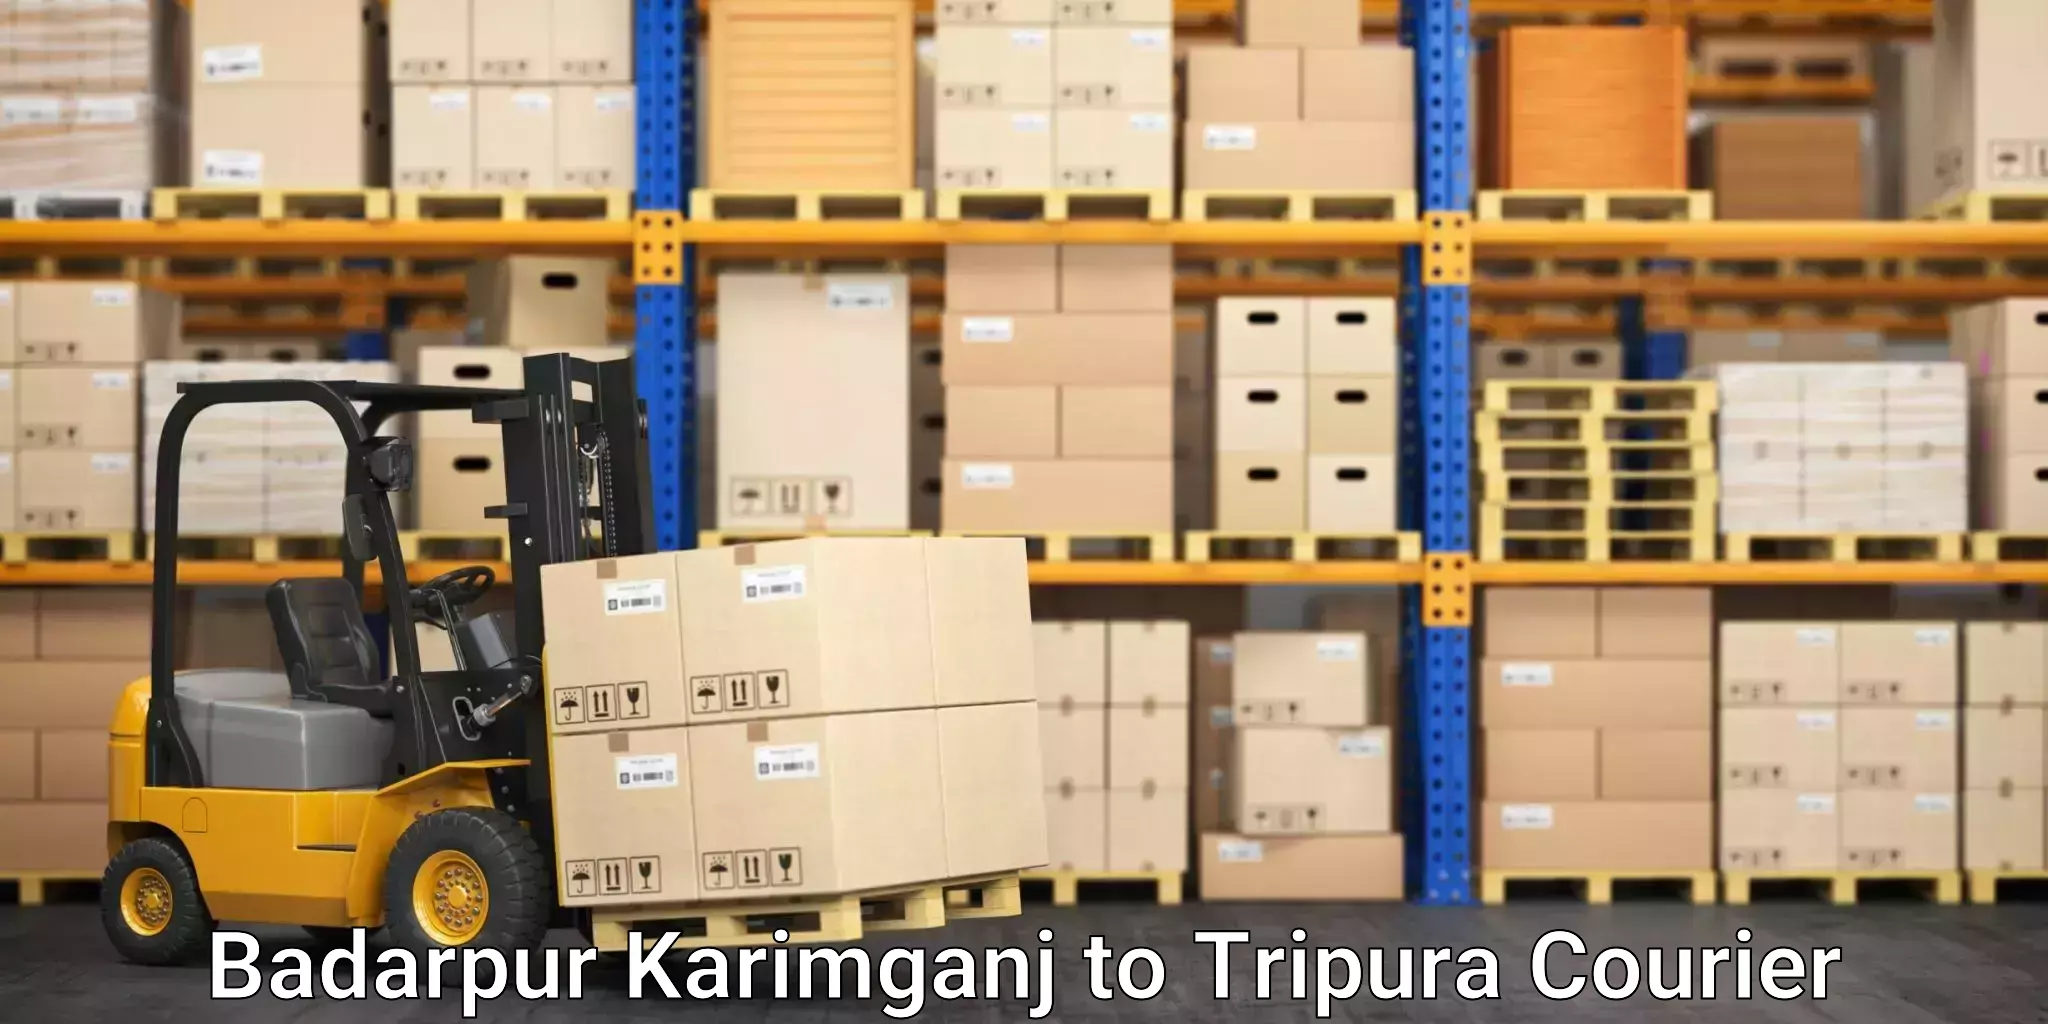 Advanced tracking systems Badarpur Karimganj to Udaipur Tripura